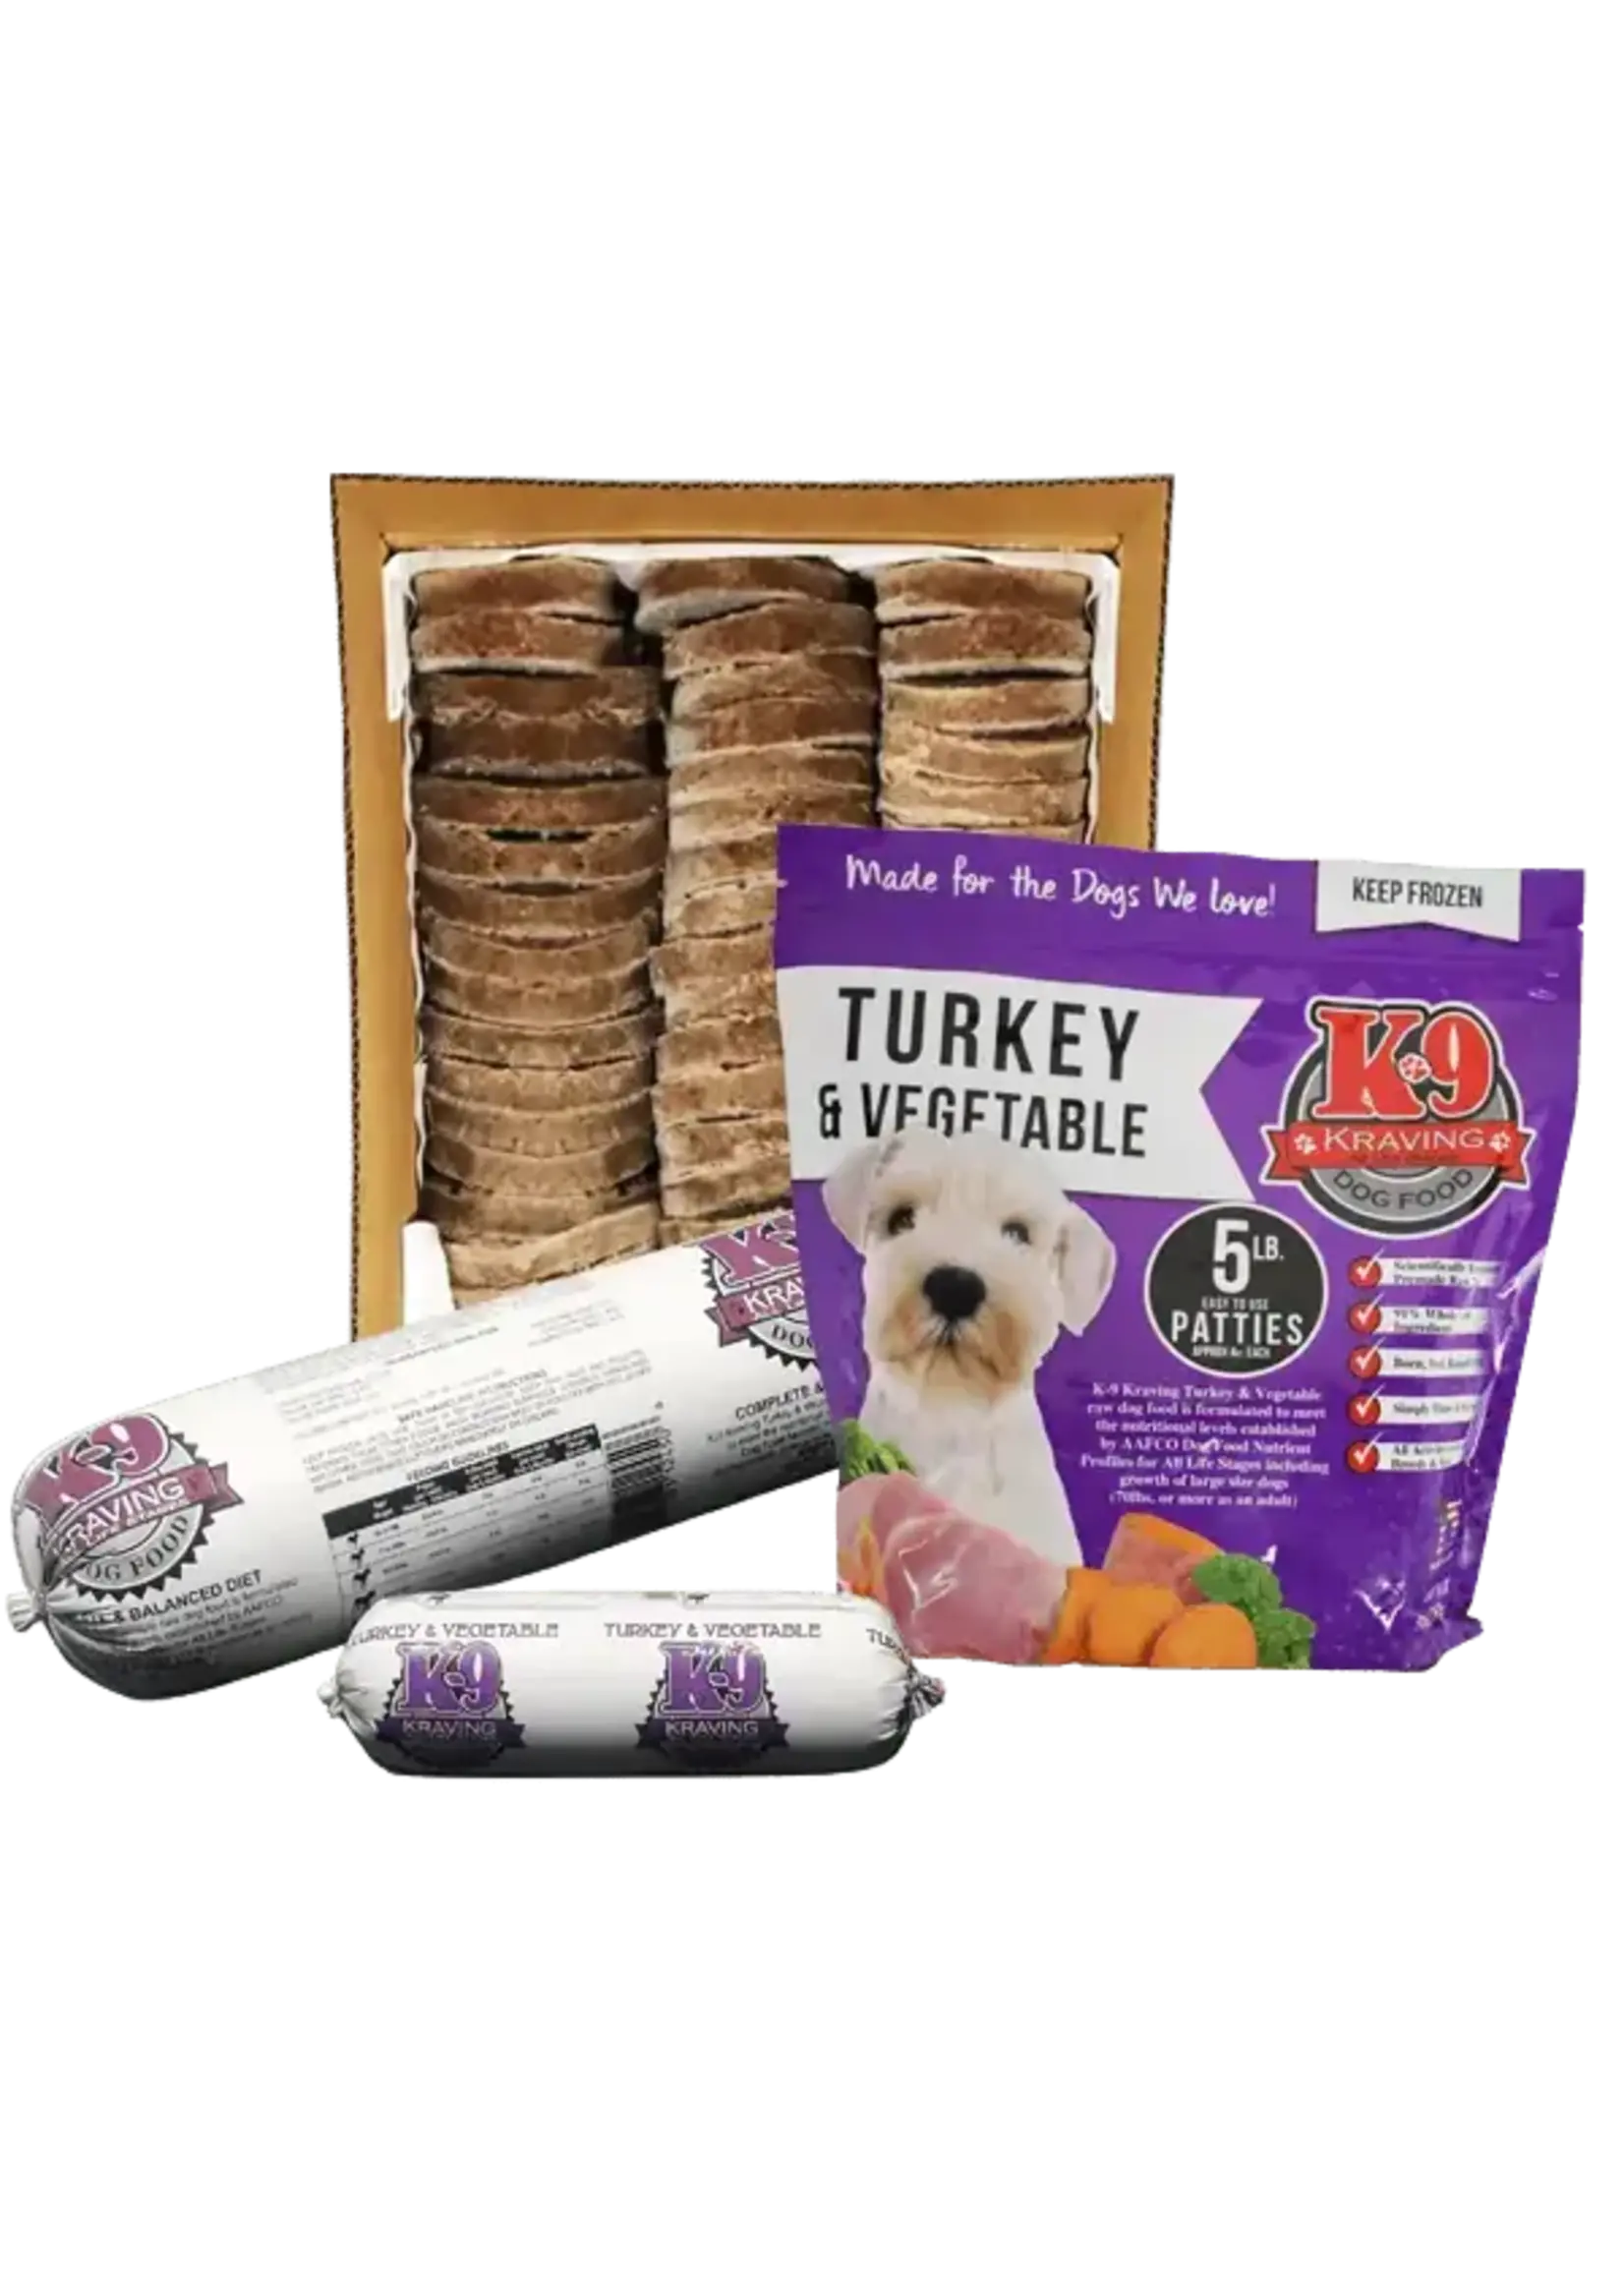 k9 Kravings K9 Cravings Turkey & Veg Chub 1lbs